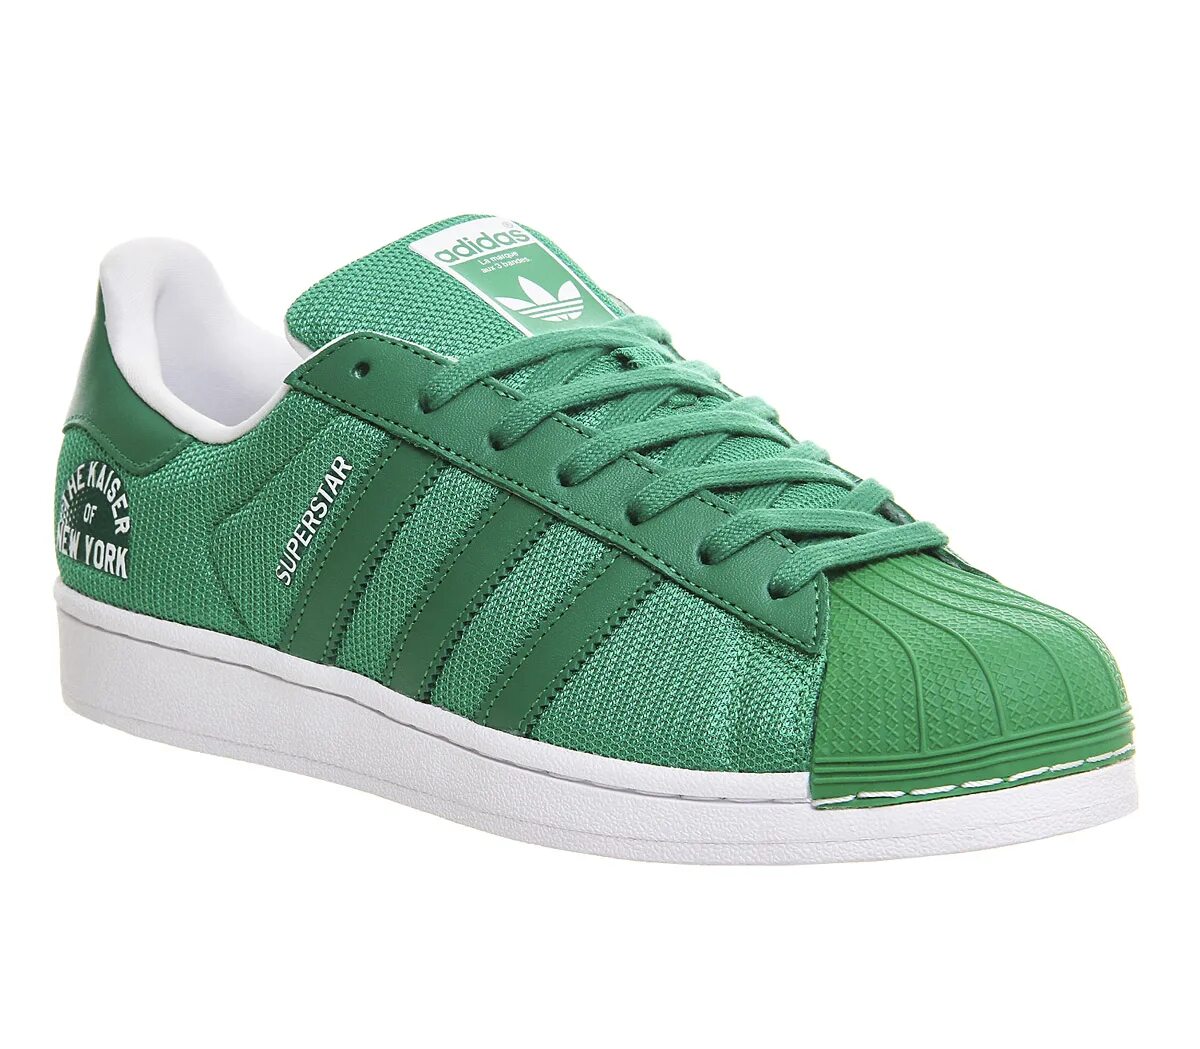 Adidas / кроссовки Superstar Green. Адидас суперстар зеленые. Adidas Superstar White Green. Кеды адидас Superstar зеленые. Купить зеленый адидас